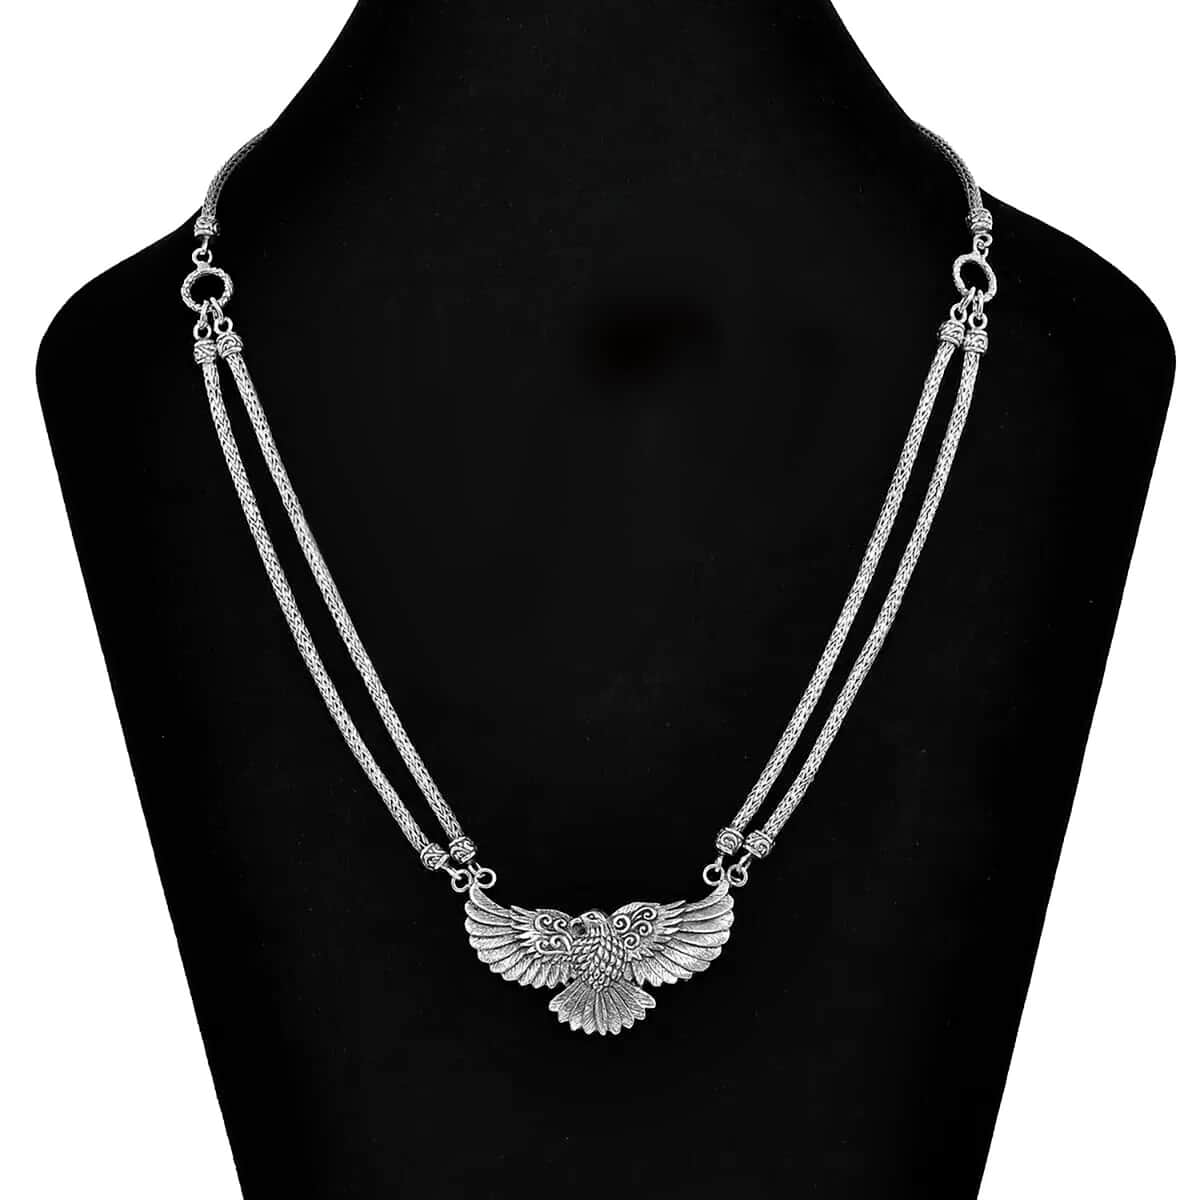 Bali Legacy Eagle Necklace, Sterling Silver Necklace, Toggle Clasp Necklace, 20-21 Inch Necklace 39 Grams image number 6